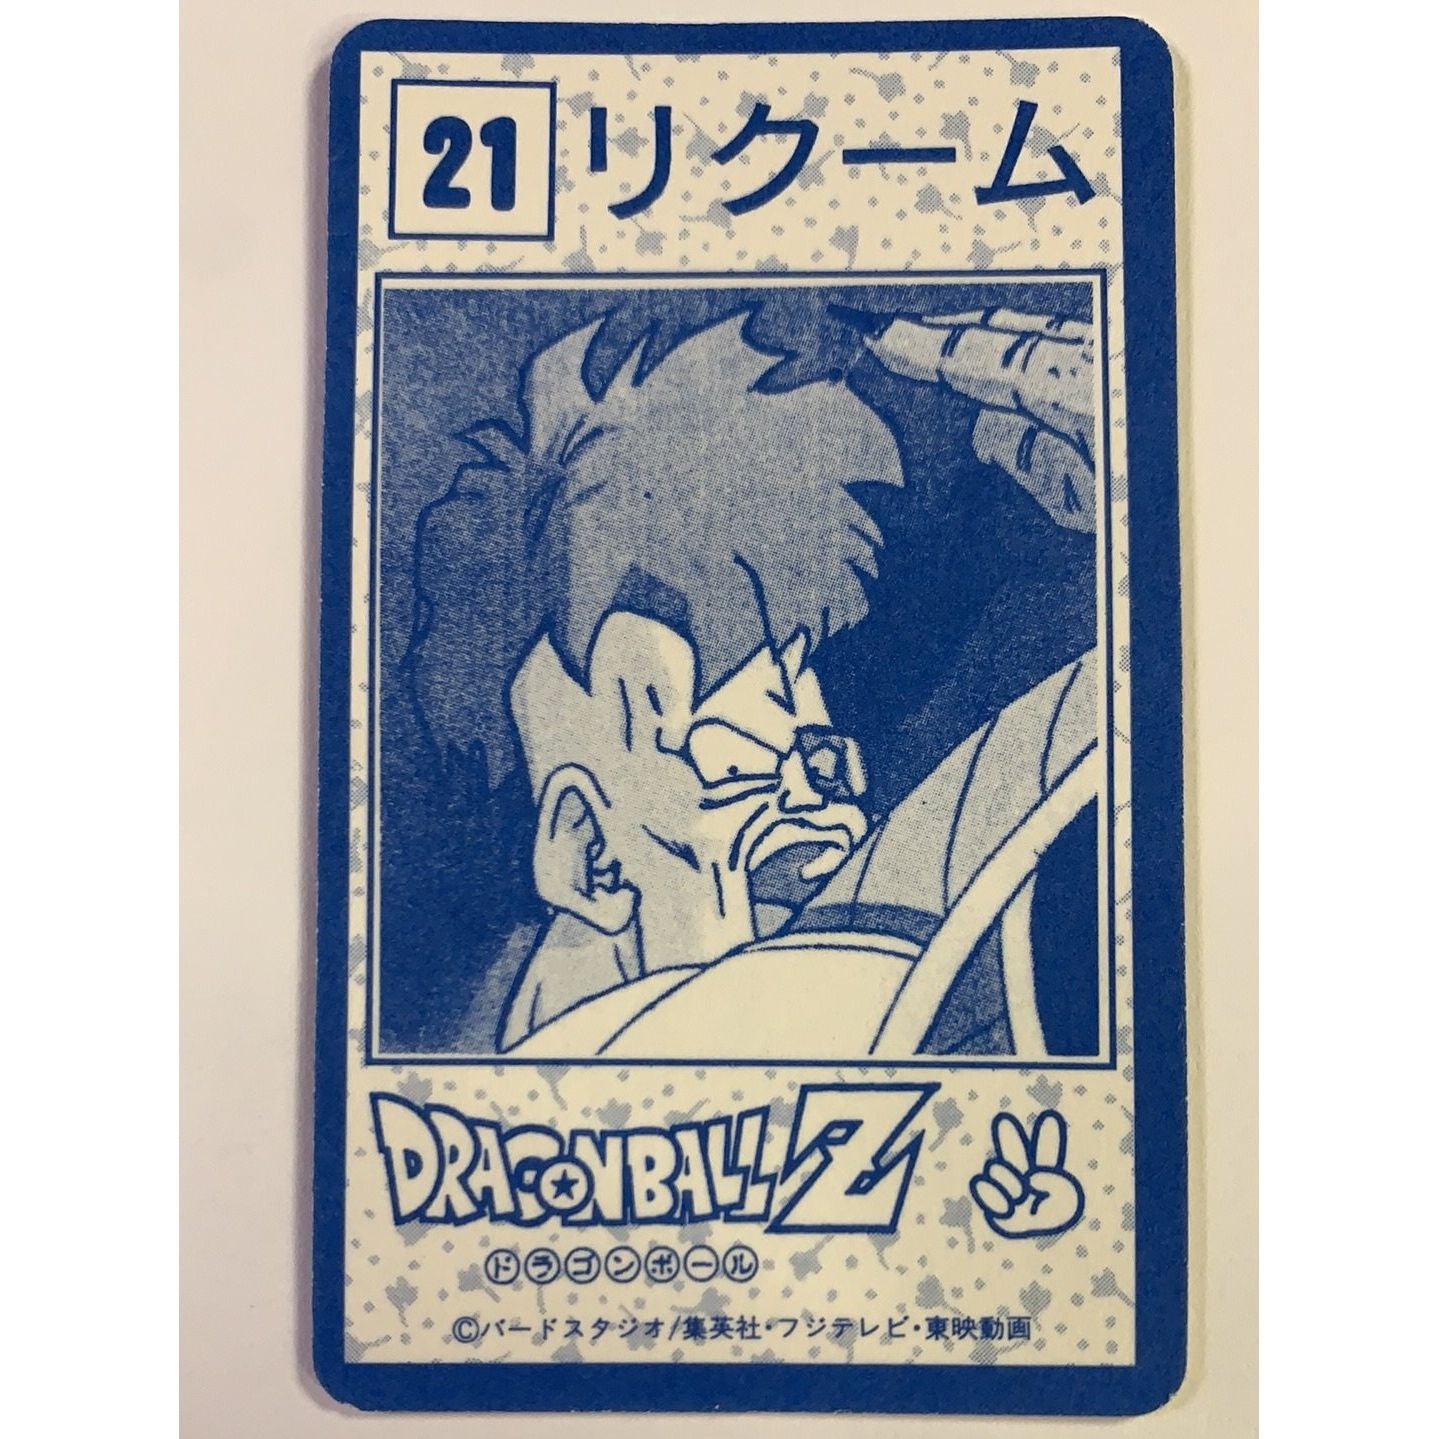  1995 Cardass Dragon Ball Z Mini Majin Boo Meets Goku  Local Legends Cards & Collectibles